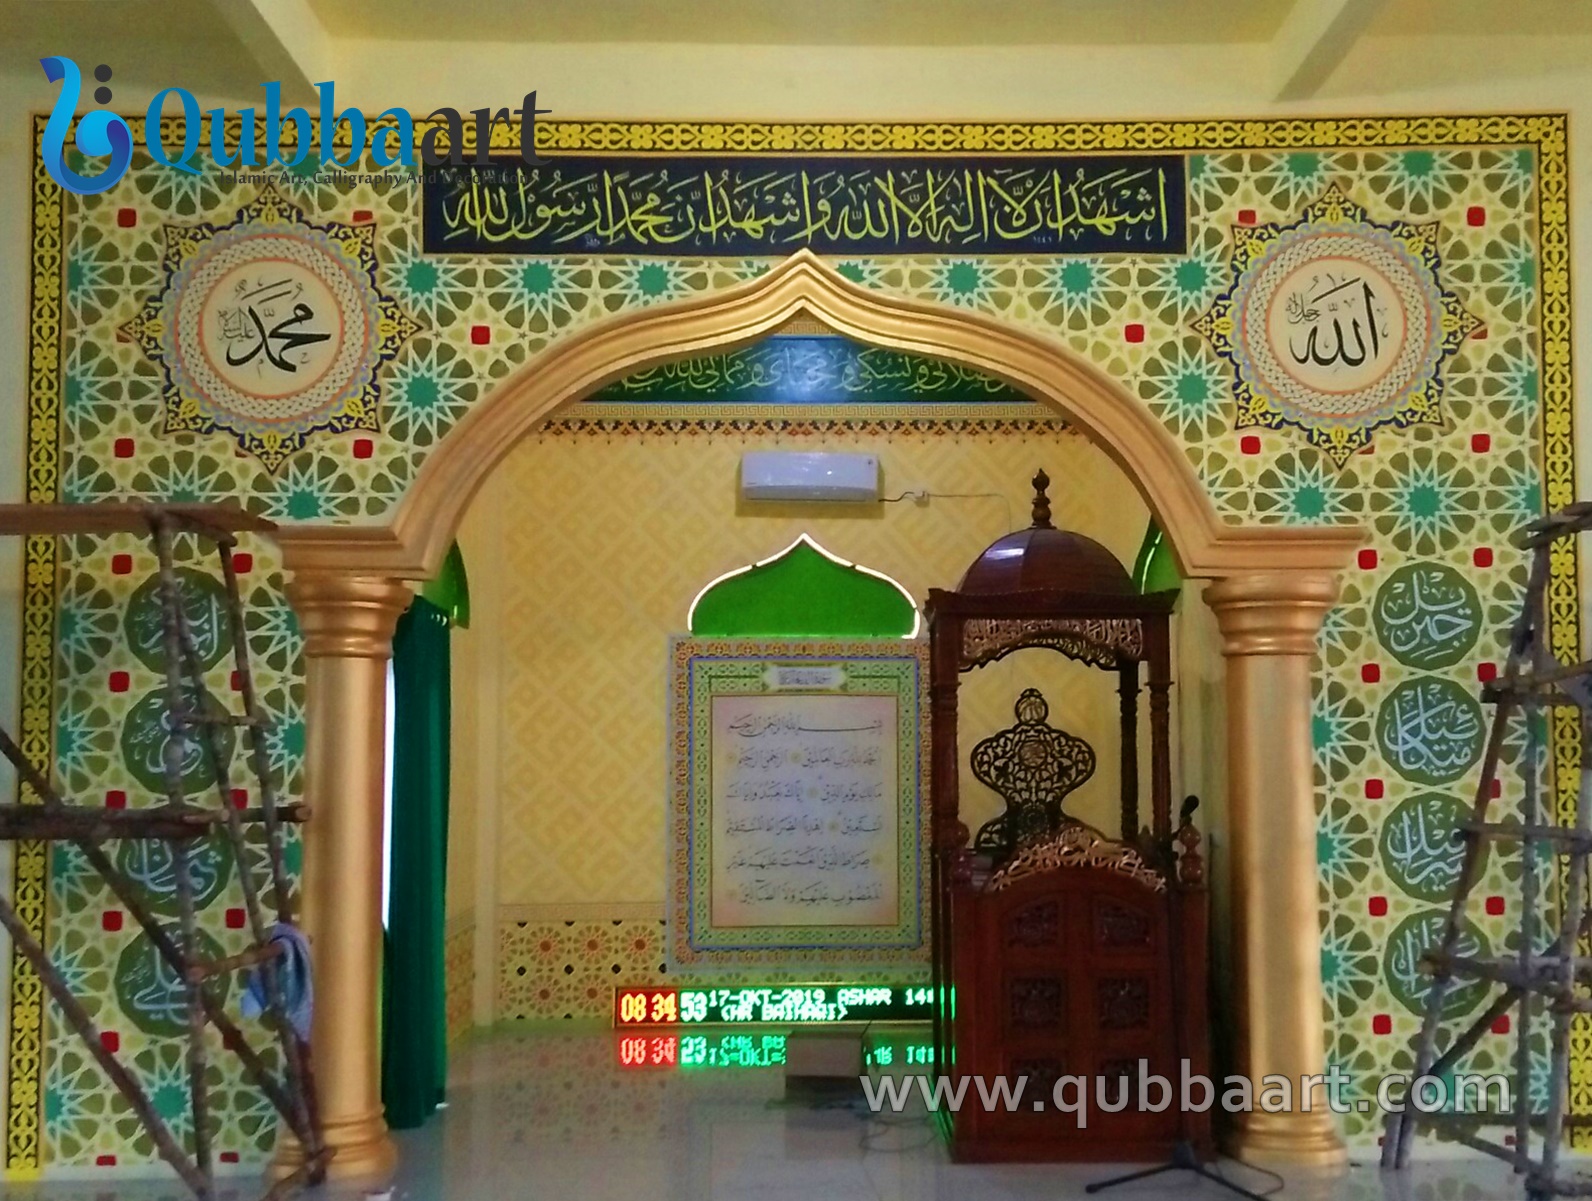 Dekorasi Kaligrafi Masjid